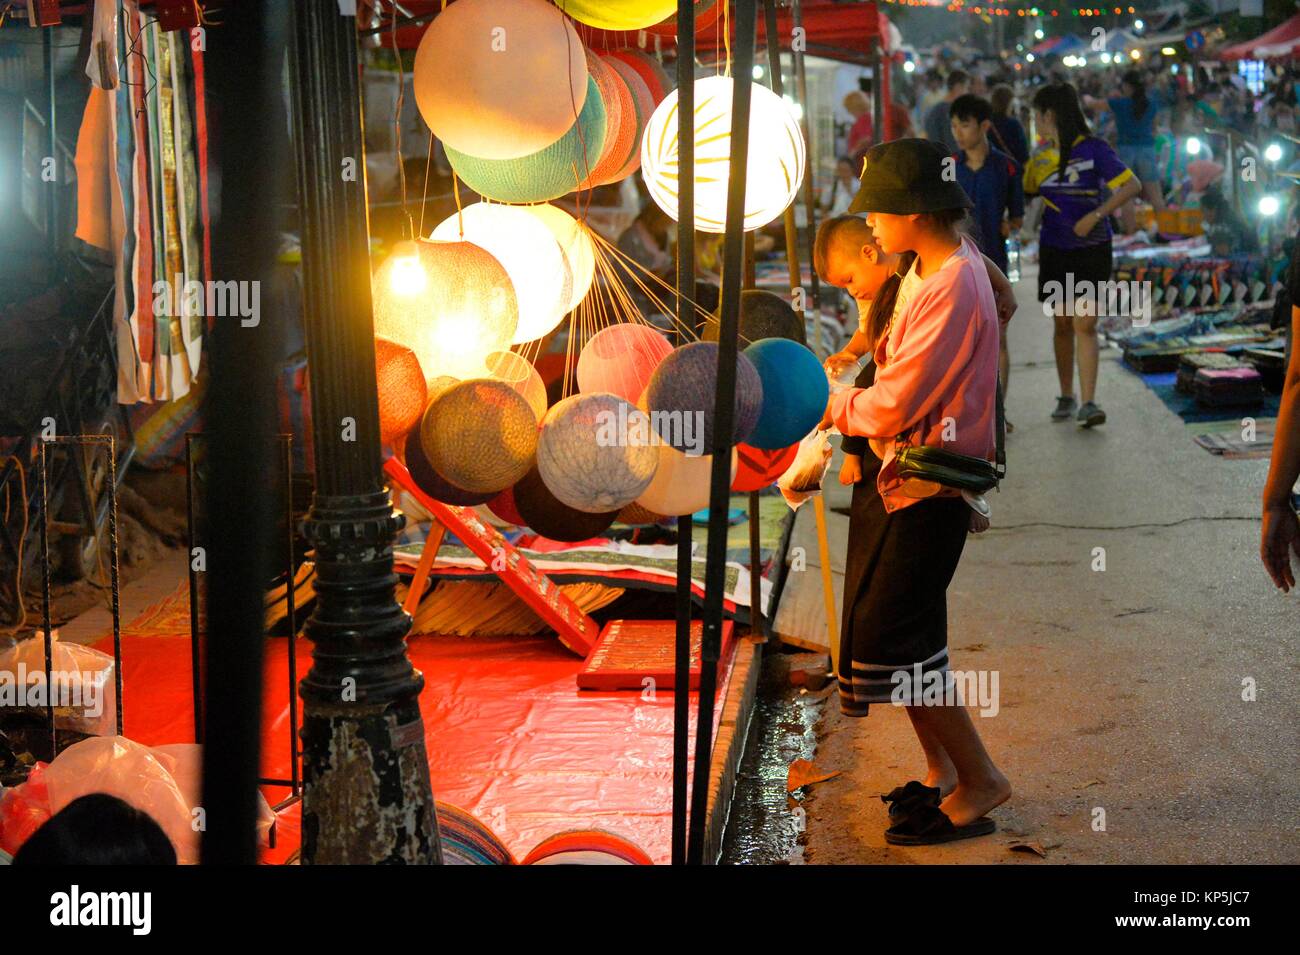 Notte di mercato,Luang Prabang,Laos,Asia sud-orientale. Foto Stock